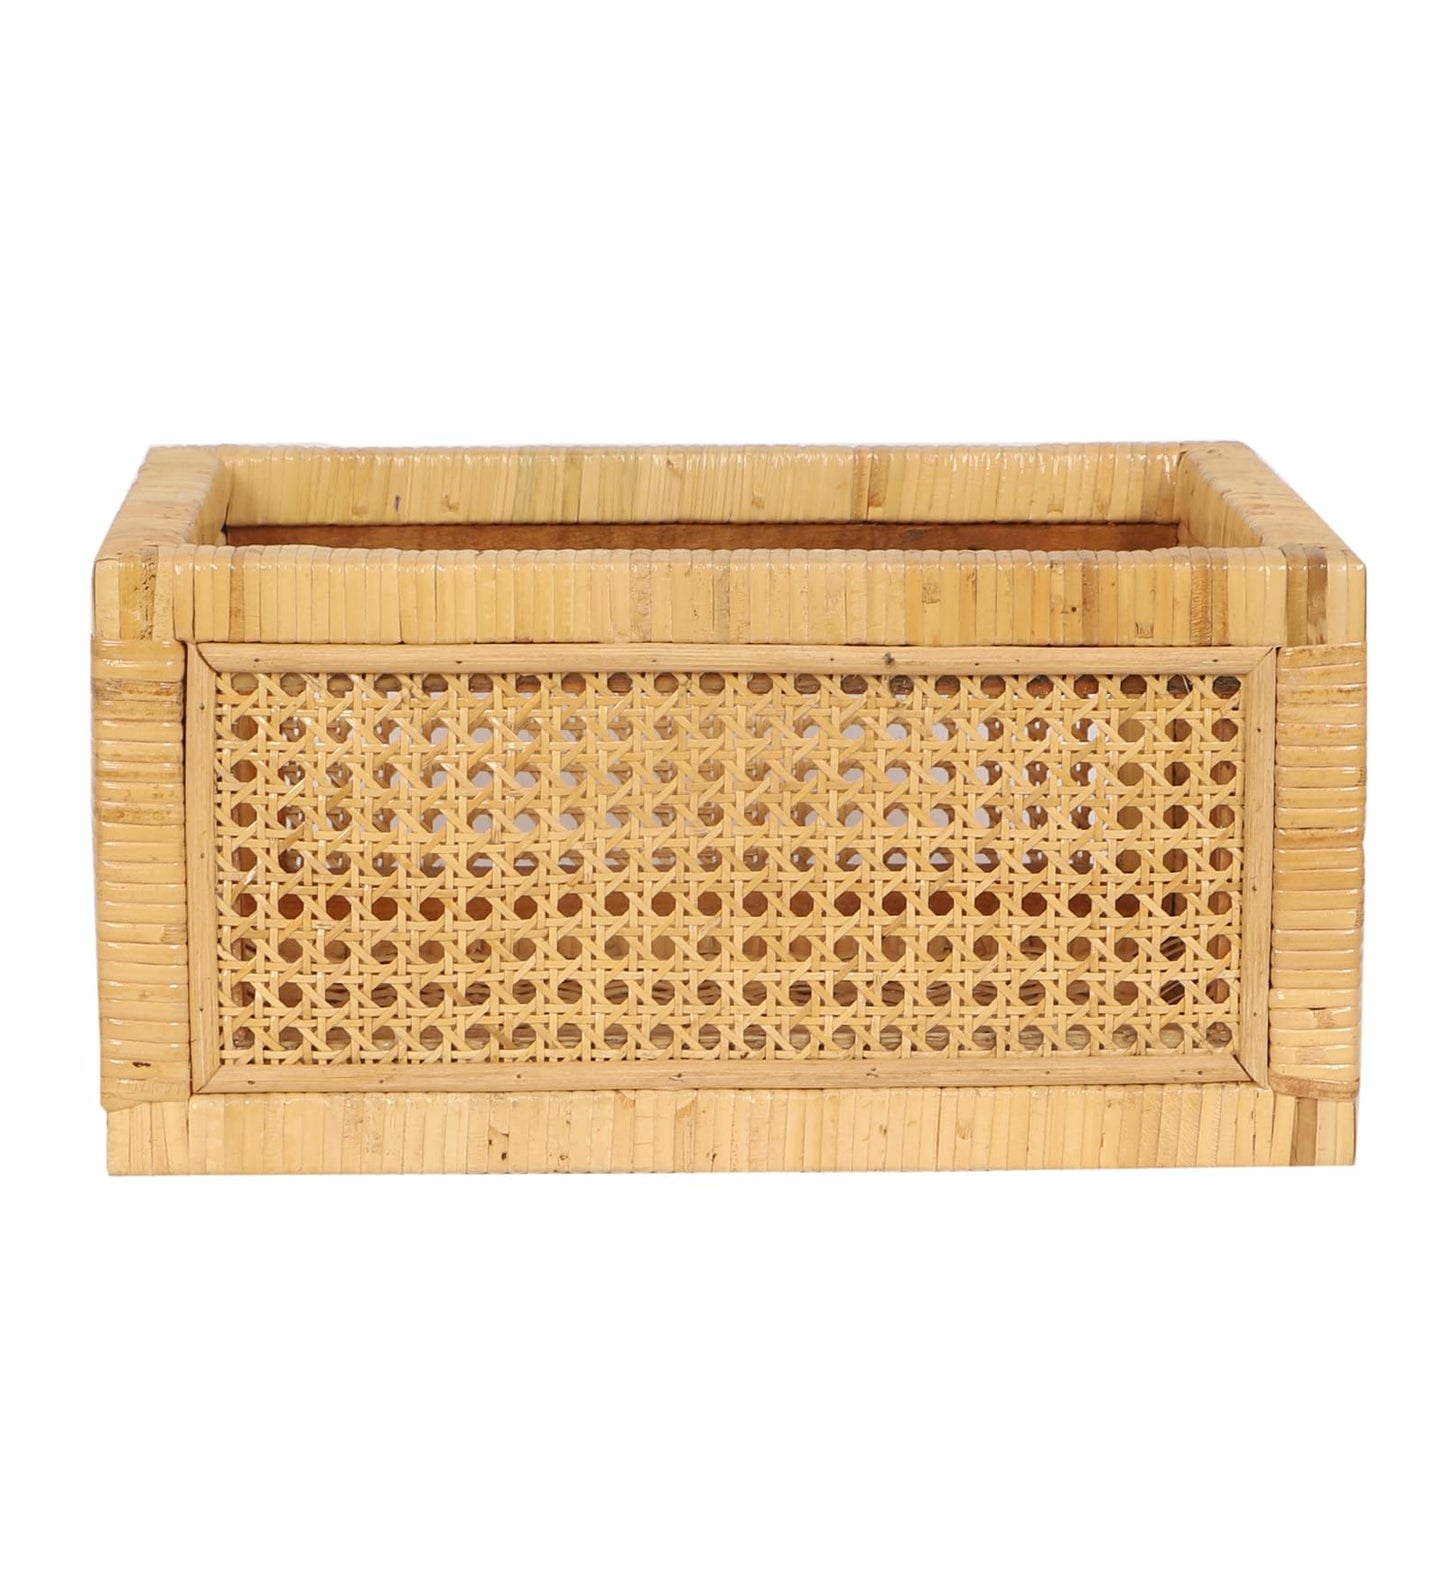 Akway Rattan cane webbing Storage basket | Wicker basket for storage organizer | Kauna Grass storage basket For Home | Kitchn Living Room - (Large, Beige)- Akway